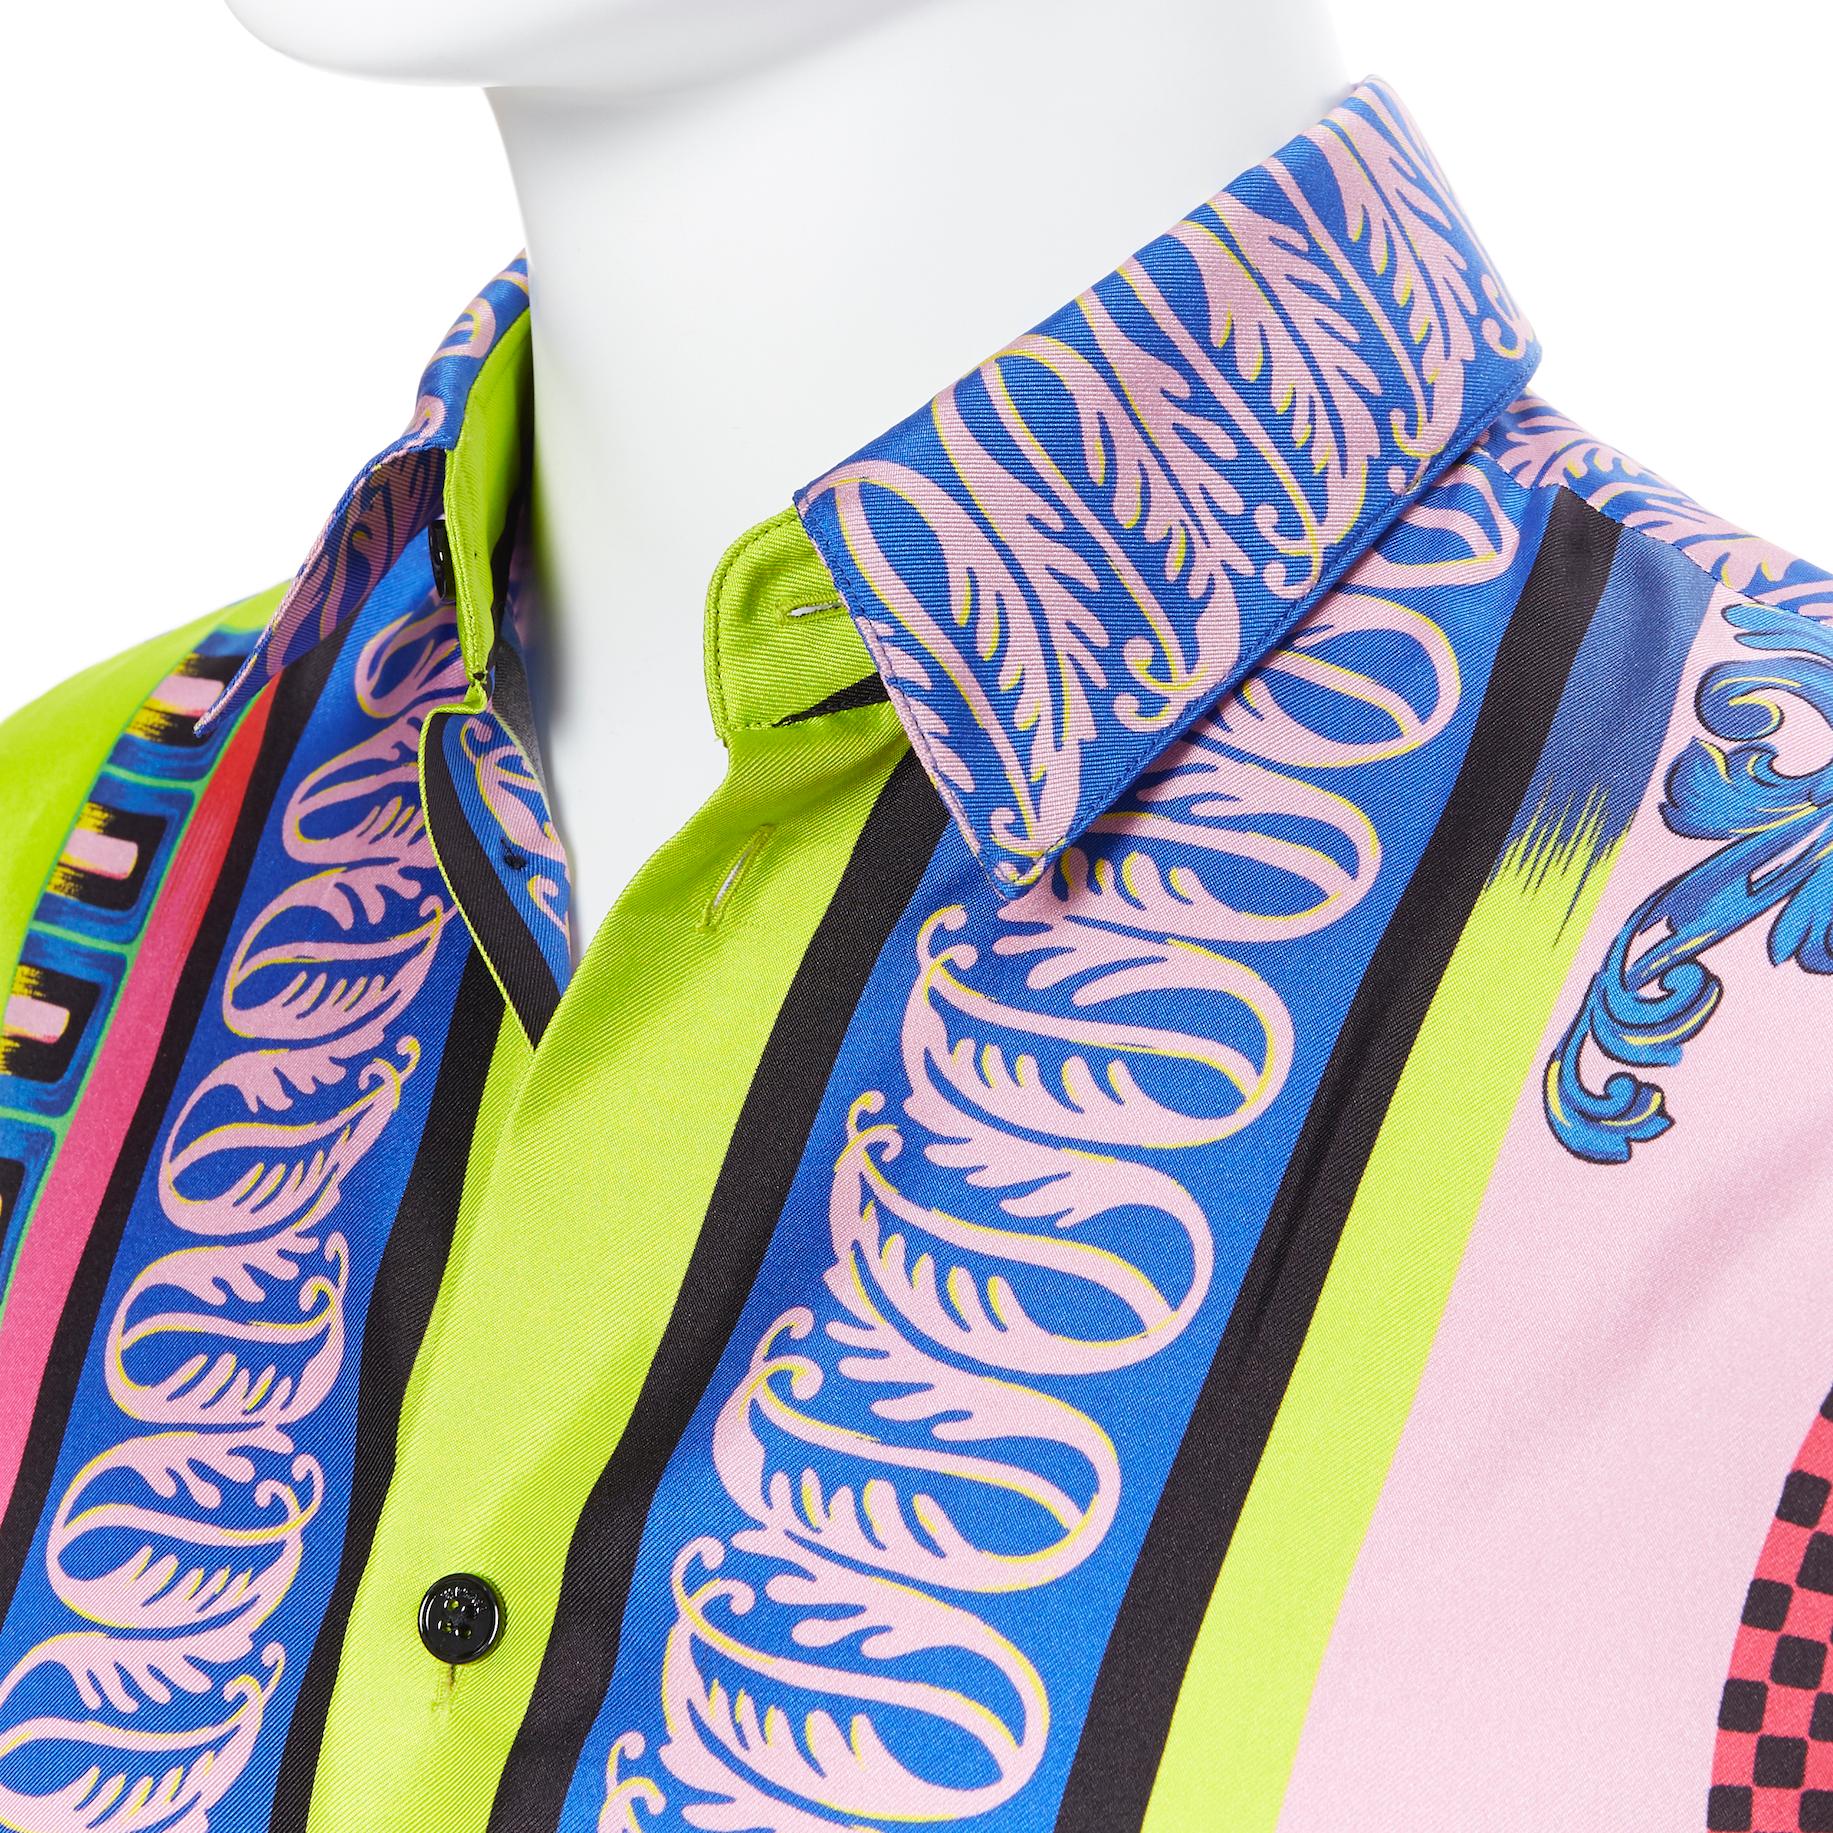 new VERSACE 2018 Runway Pop Foulard Medusa neon baroque 100% silk shirt EU39 M
Brand: Versace
Designer: Donatella Versace
Collection: Pre-fall 2018
Model Name / Style: Silk shirt
Material: Silk
Color: Multicolour
Pattern: Other
Closure: Button
Extra